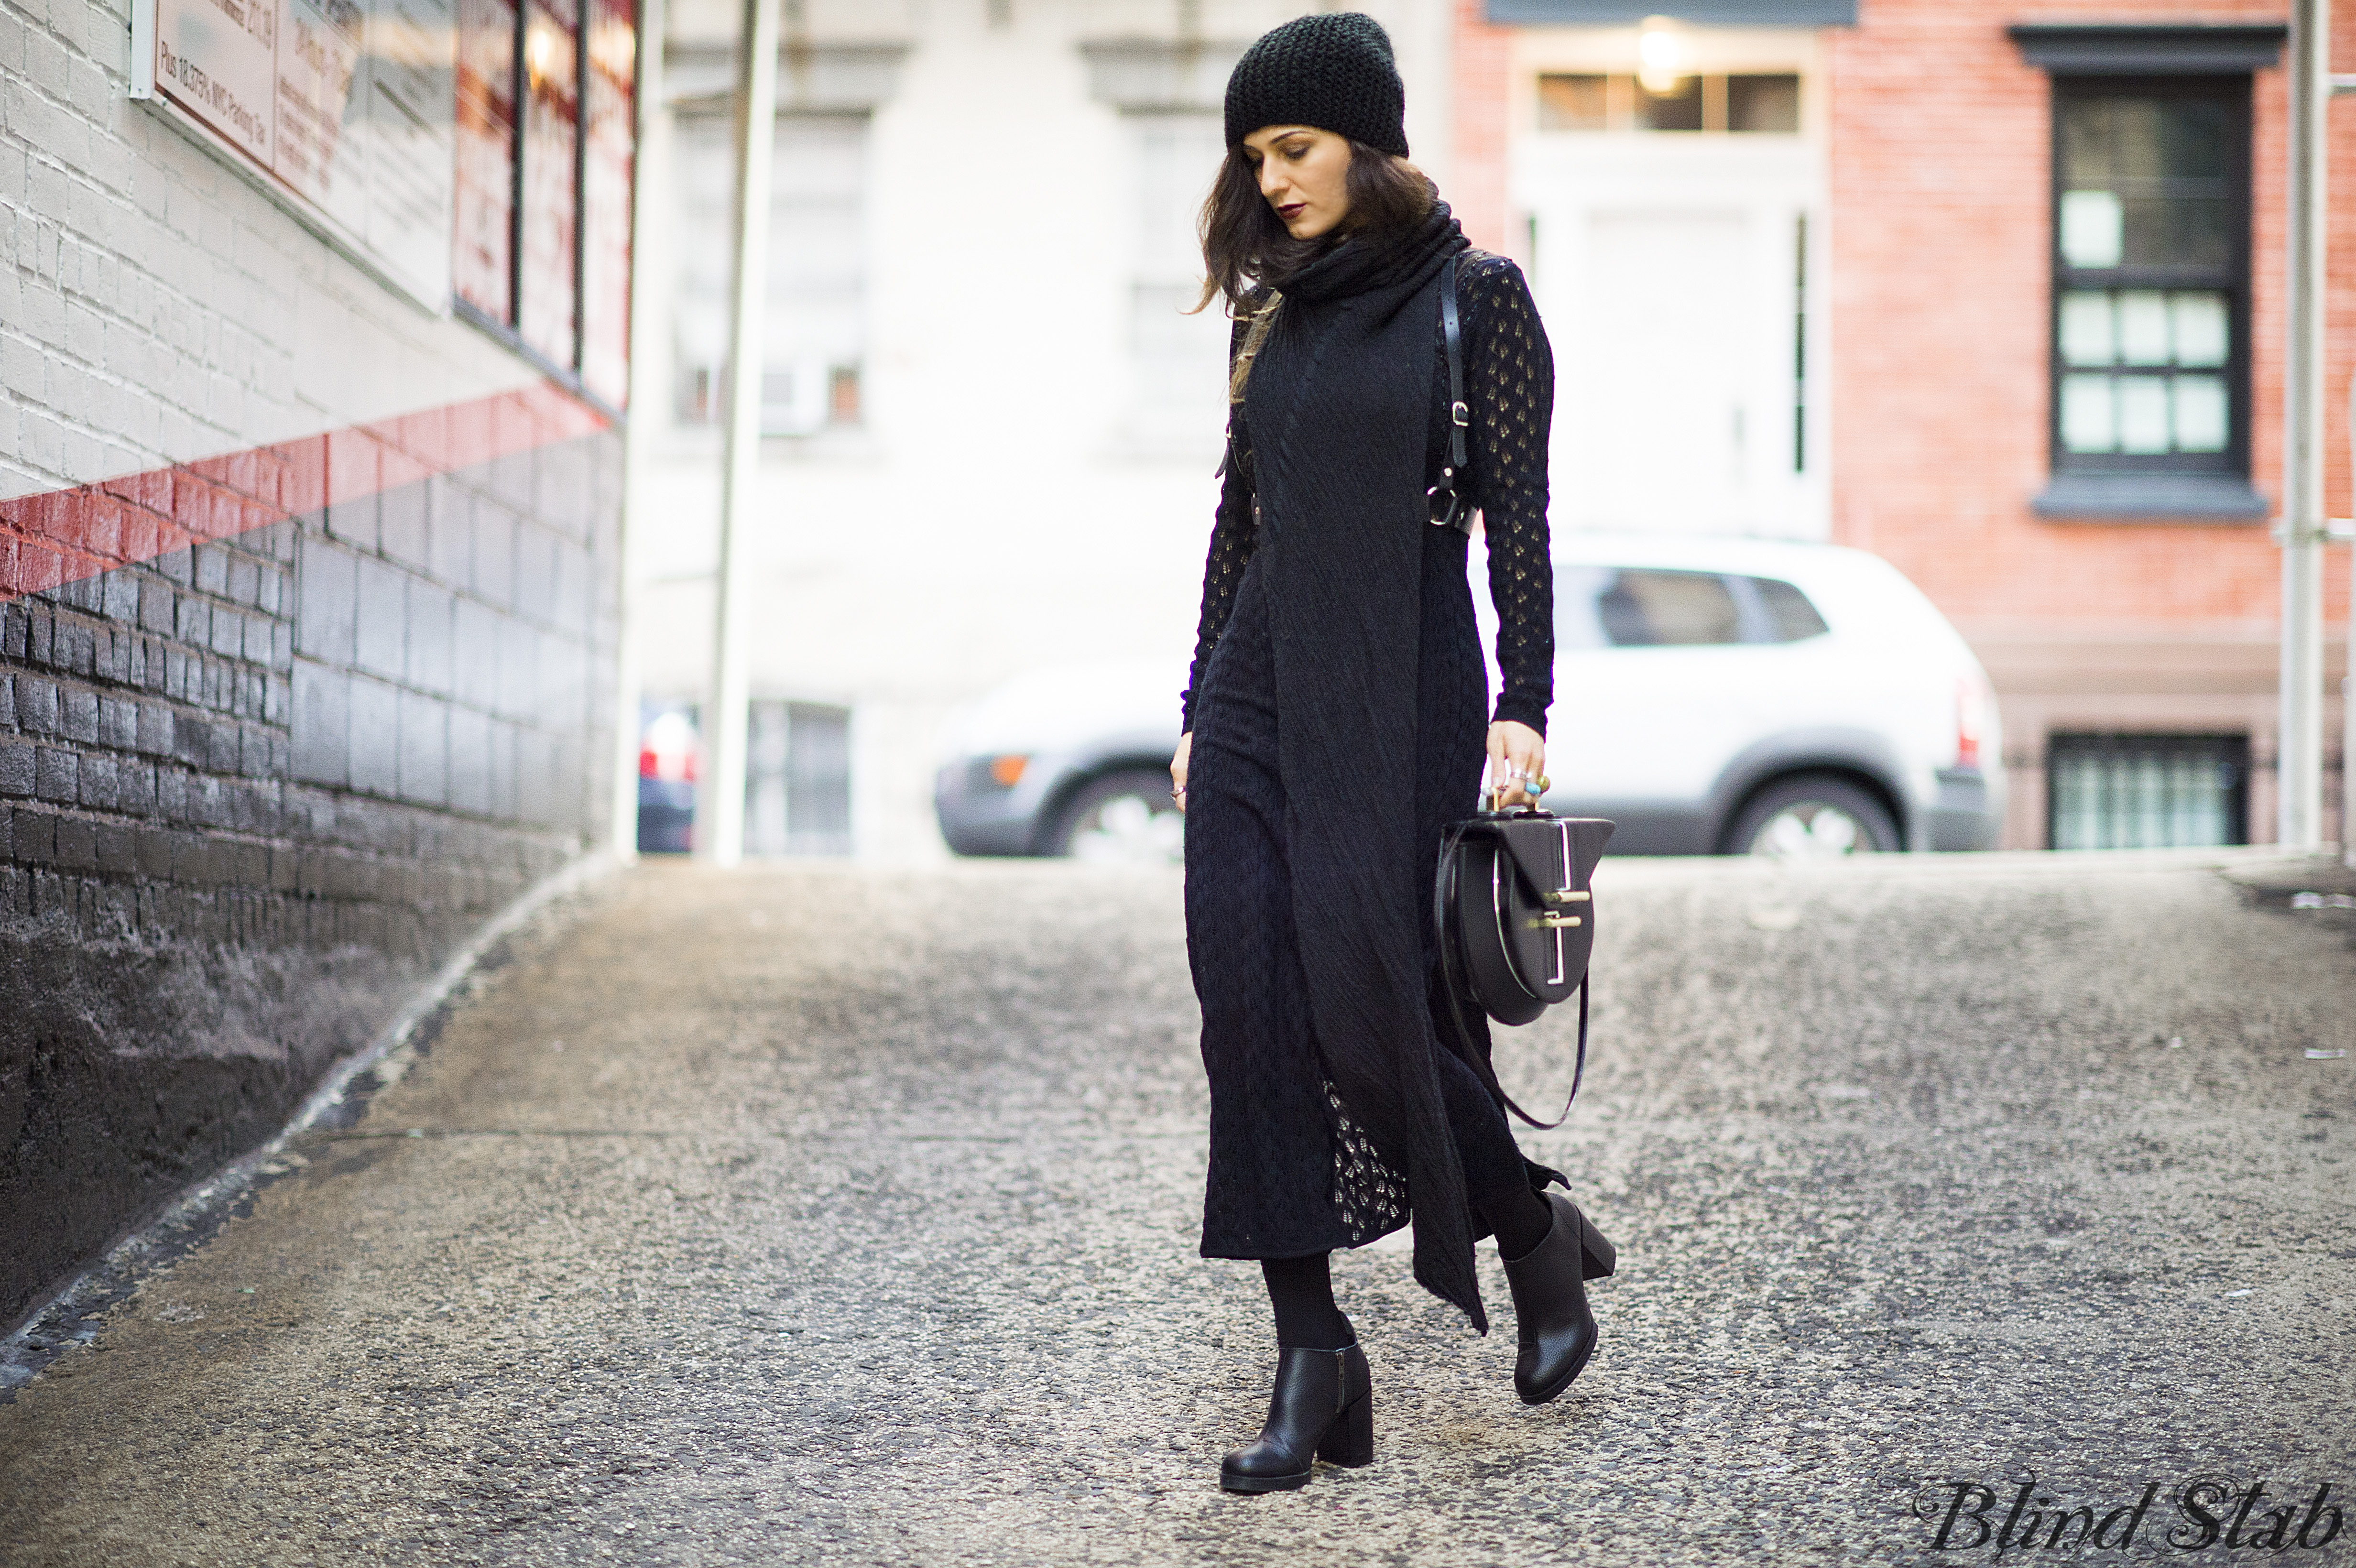 Zana-Bayne-Harness-Curvy-Woman-Black-Maxi-Dress